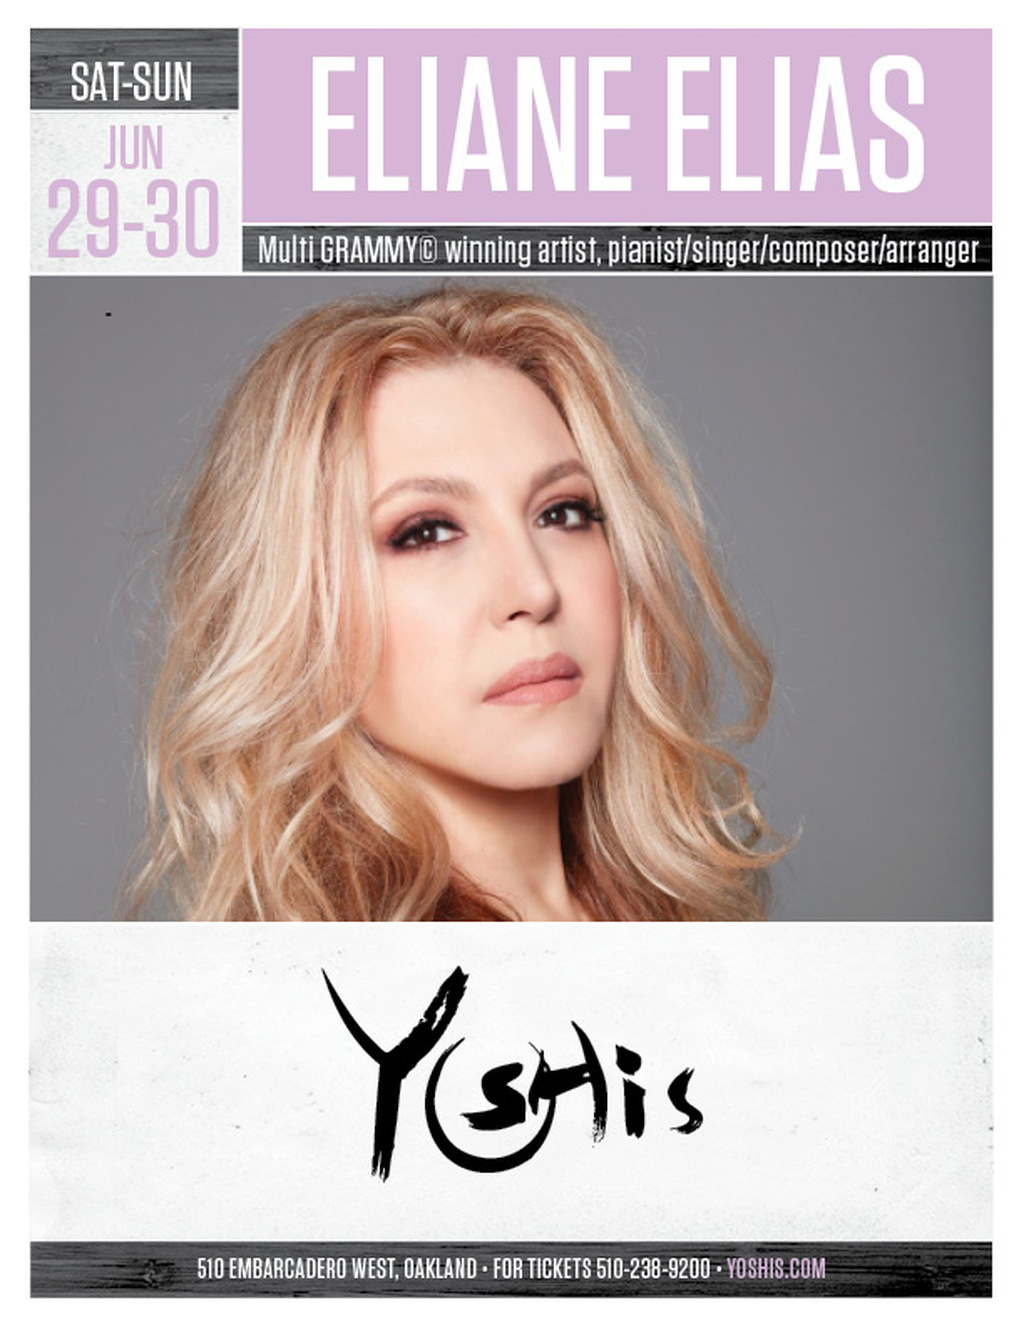 Yoshi s Get Ready to Groove with Eliane Elias at Yoshi s  promotion flier on Digifli com